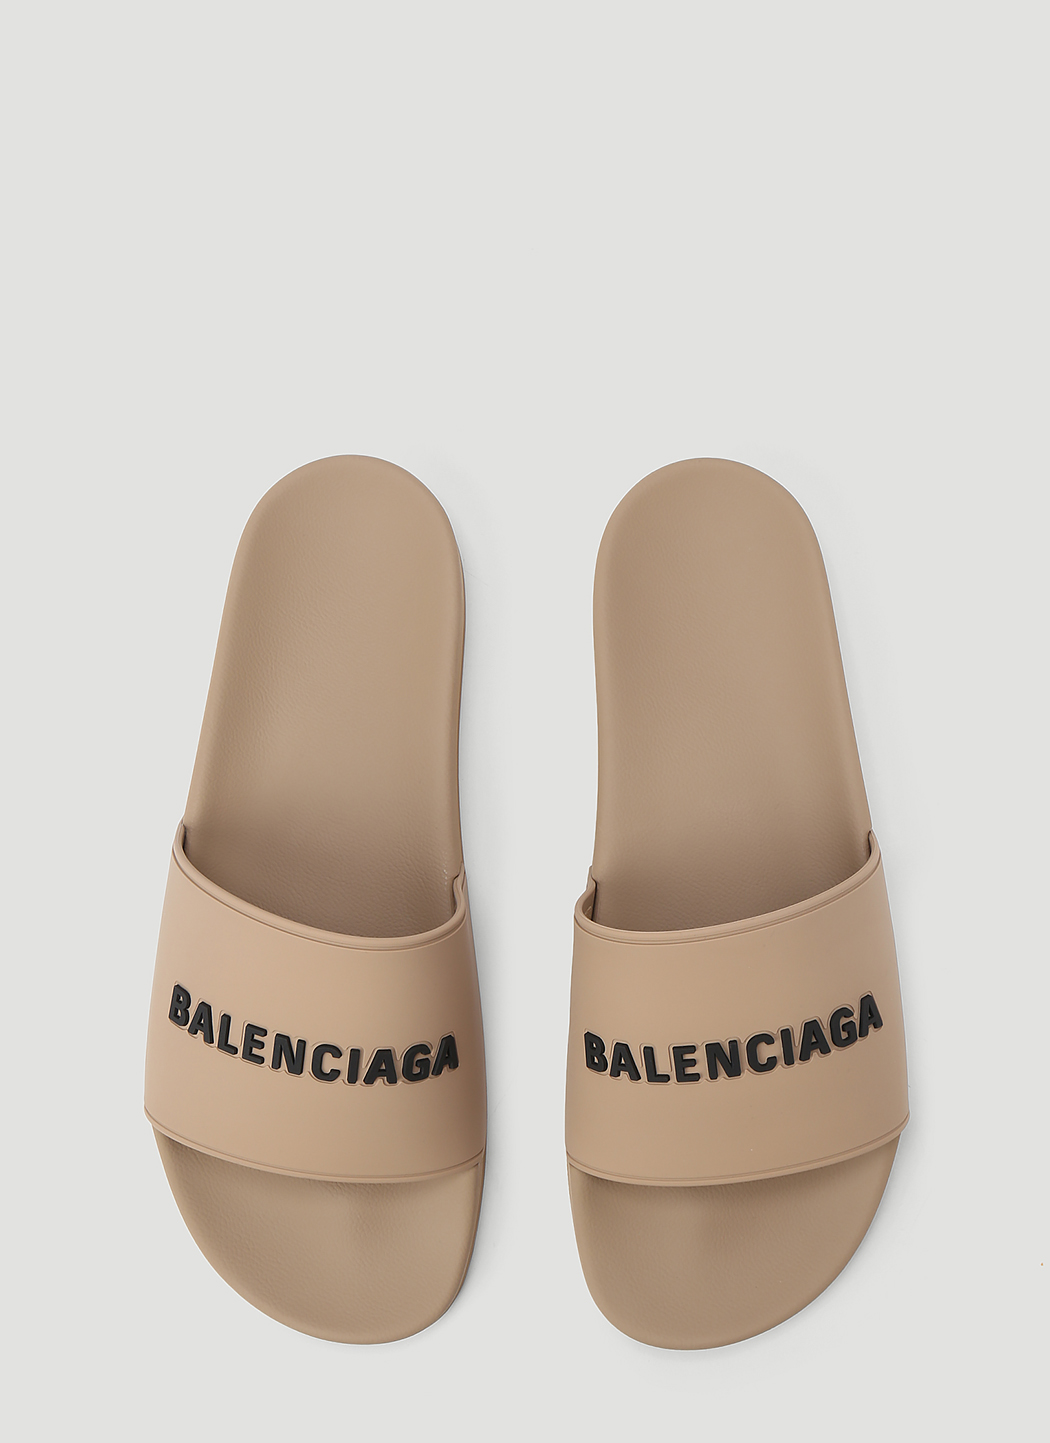 Balenciaga Pool Slide Sandal in Beige | LN-CC